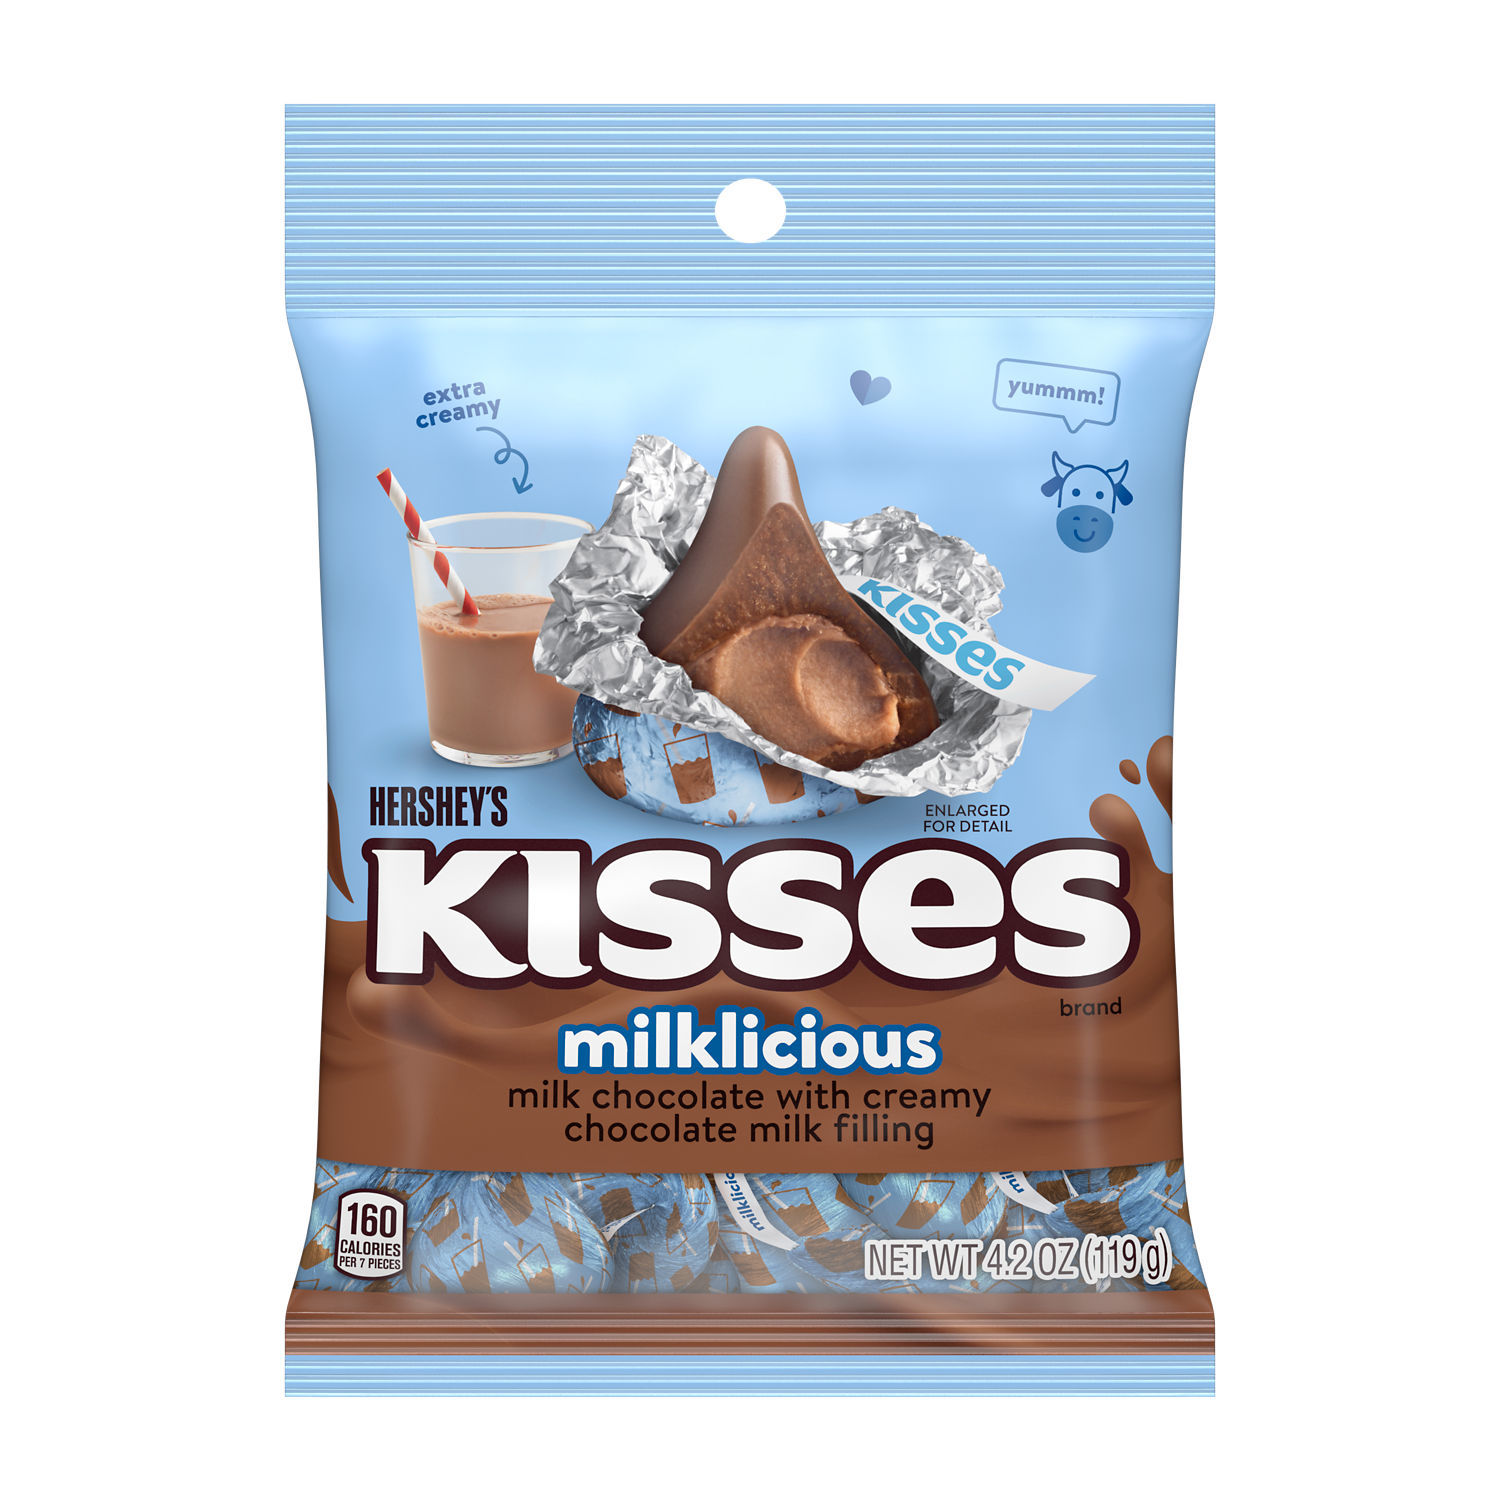 Hershey's Kisses Milklicious Milk Chocolate Candy, Bag 4.2 oz - image 1 of 5